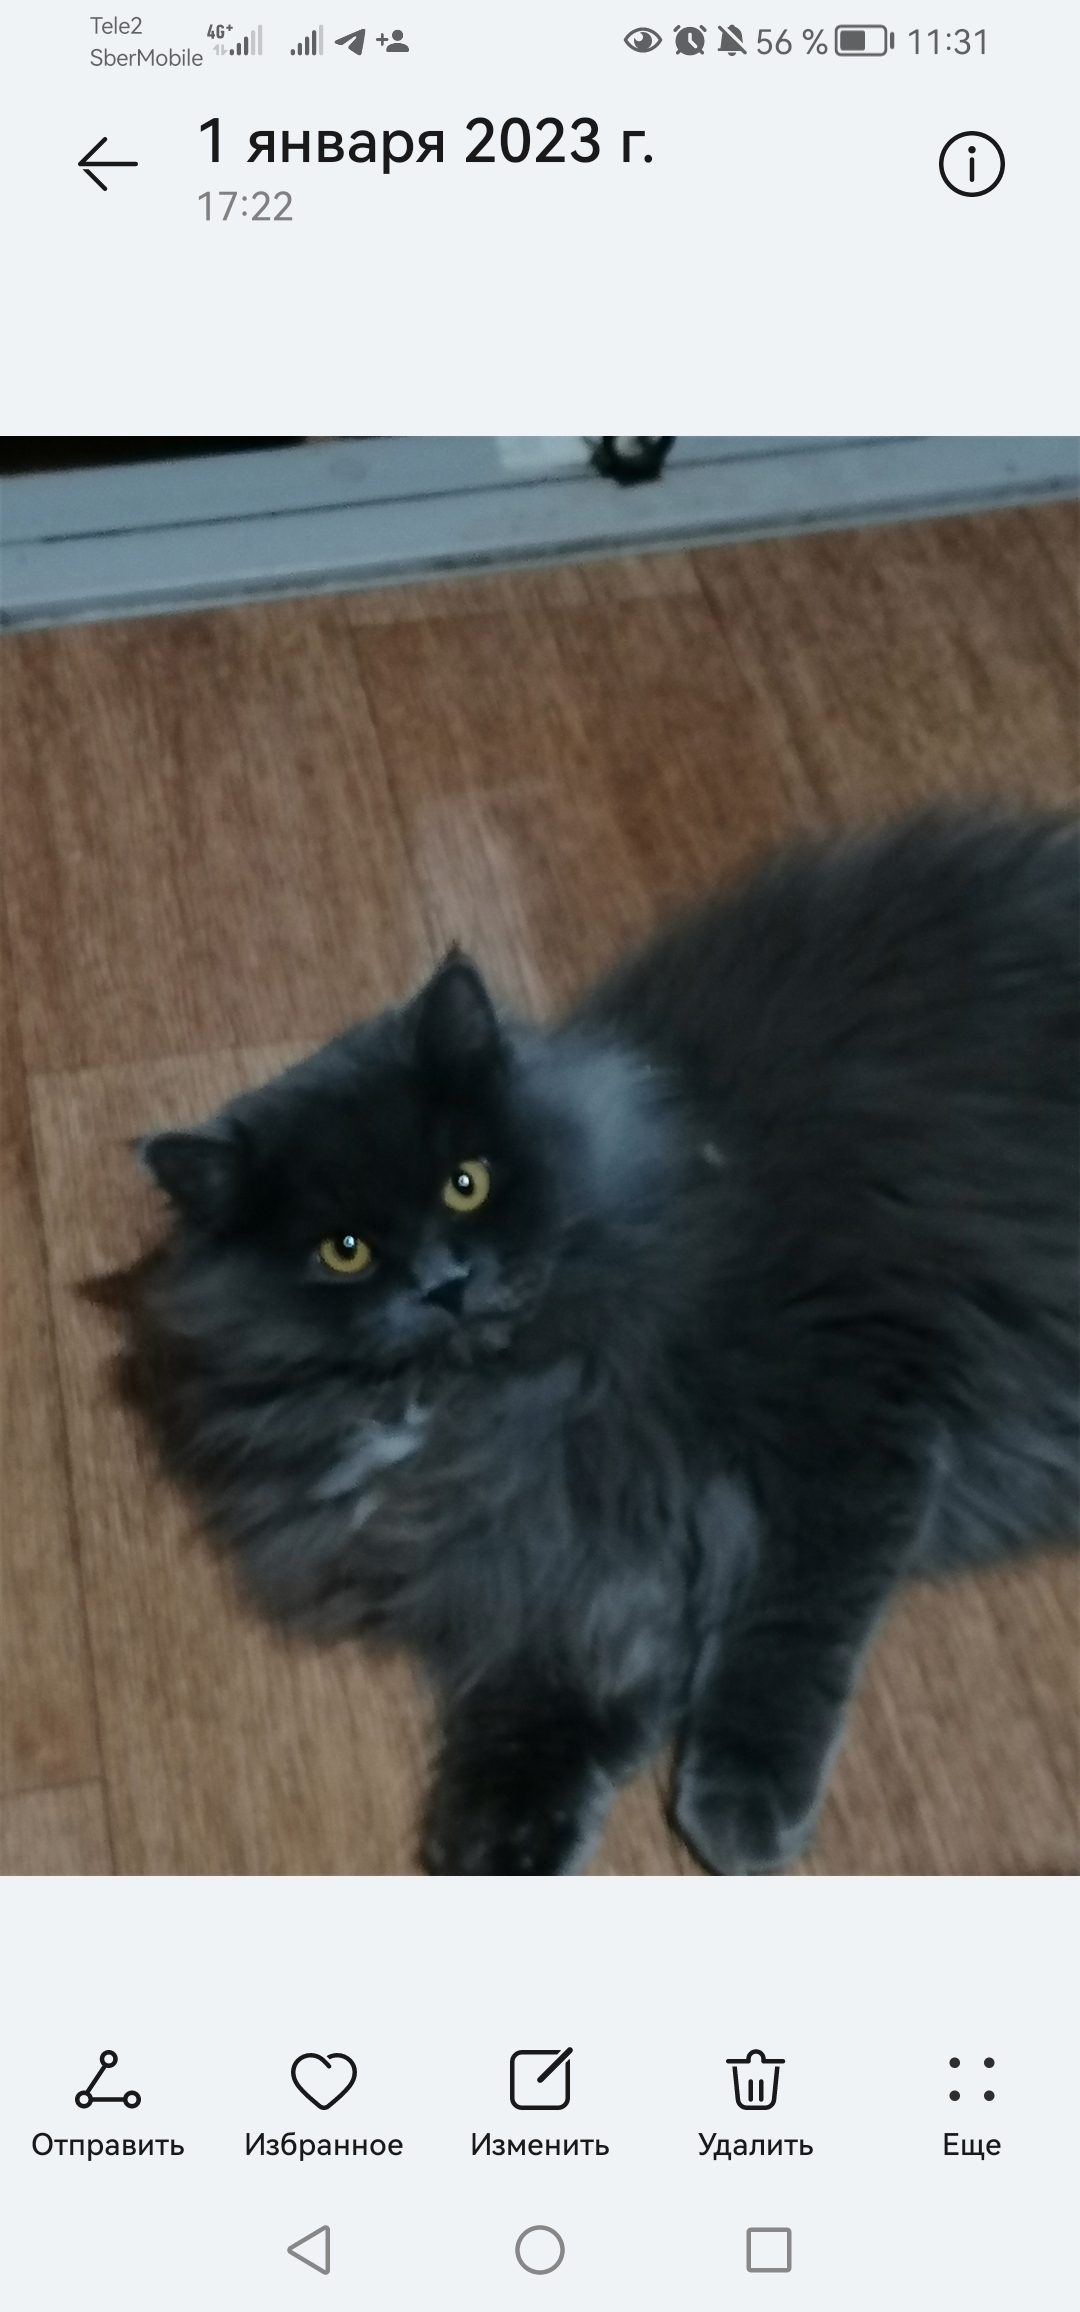 Пропала кошка Котик серого окраса, Оренбург